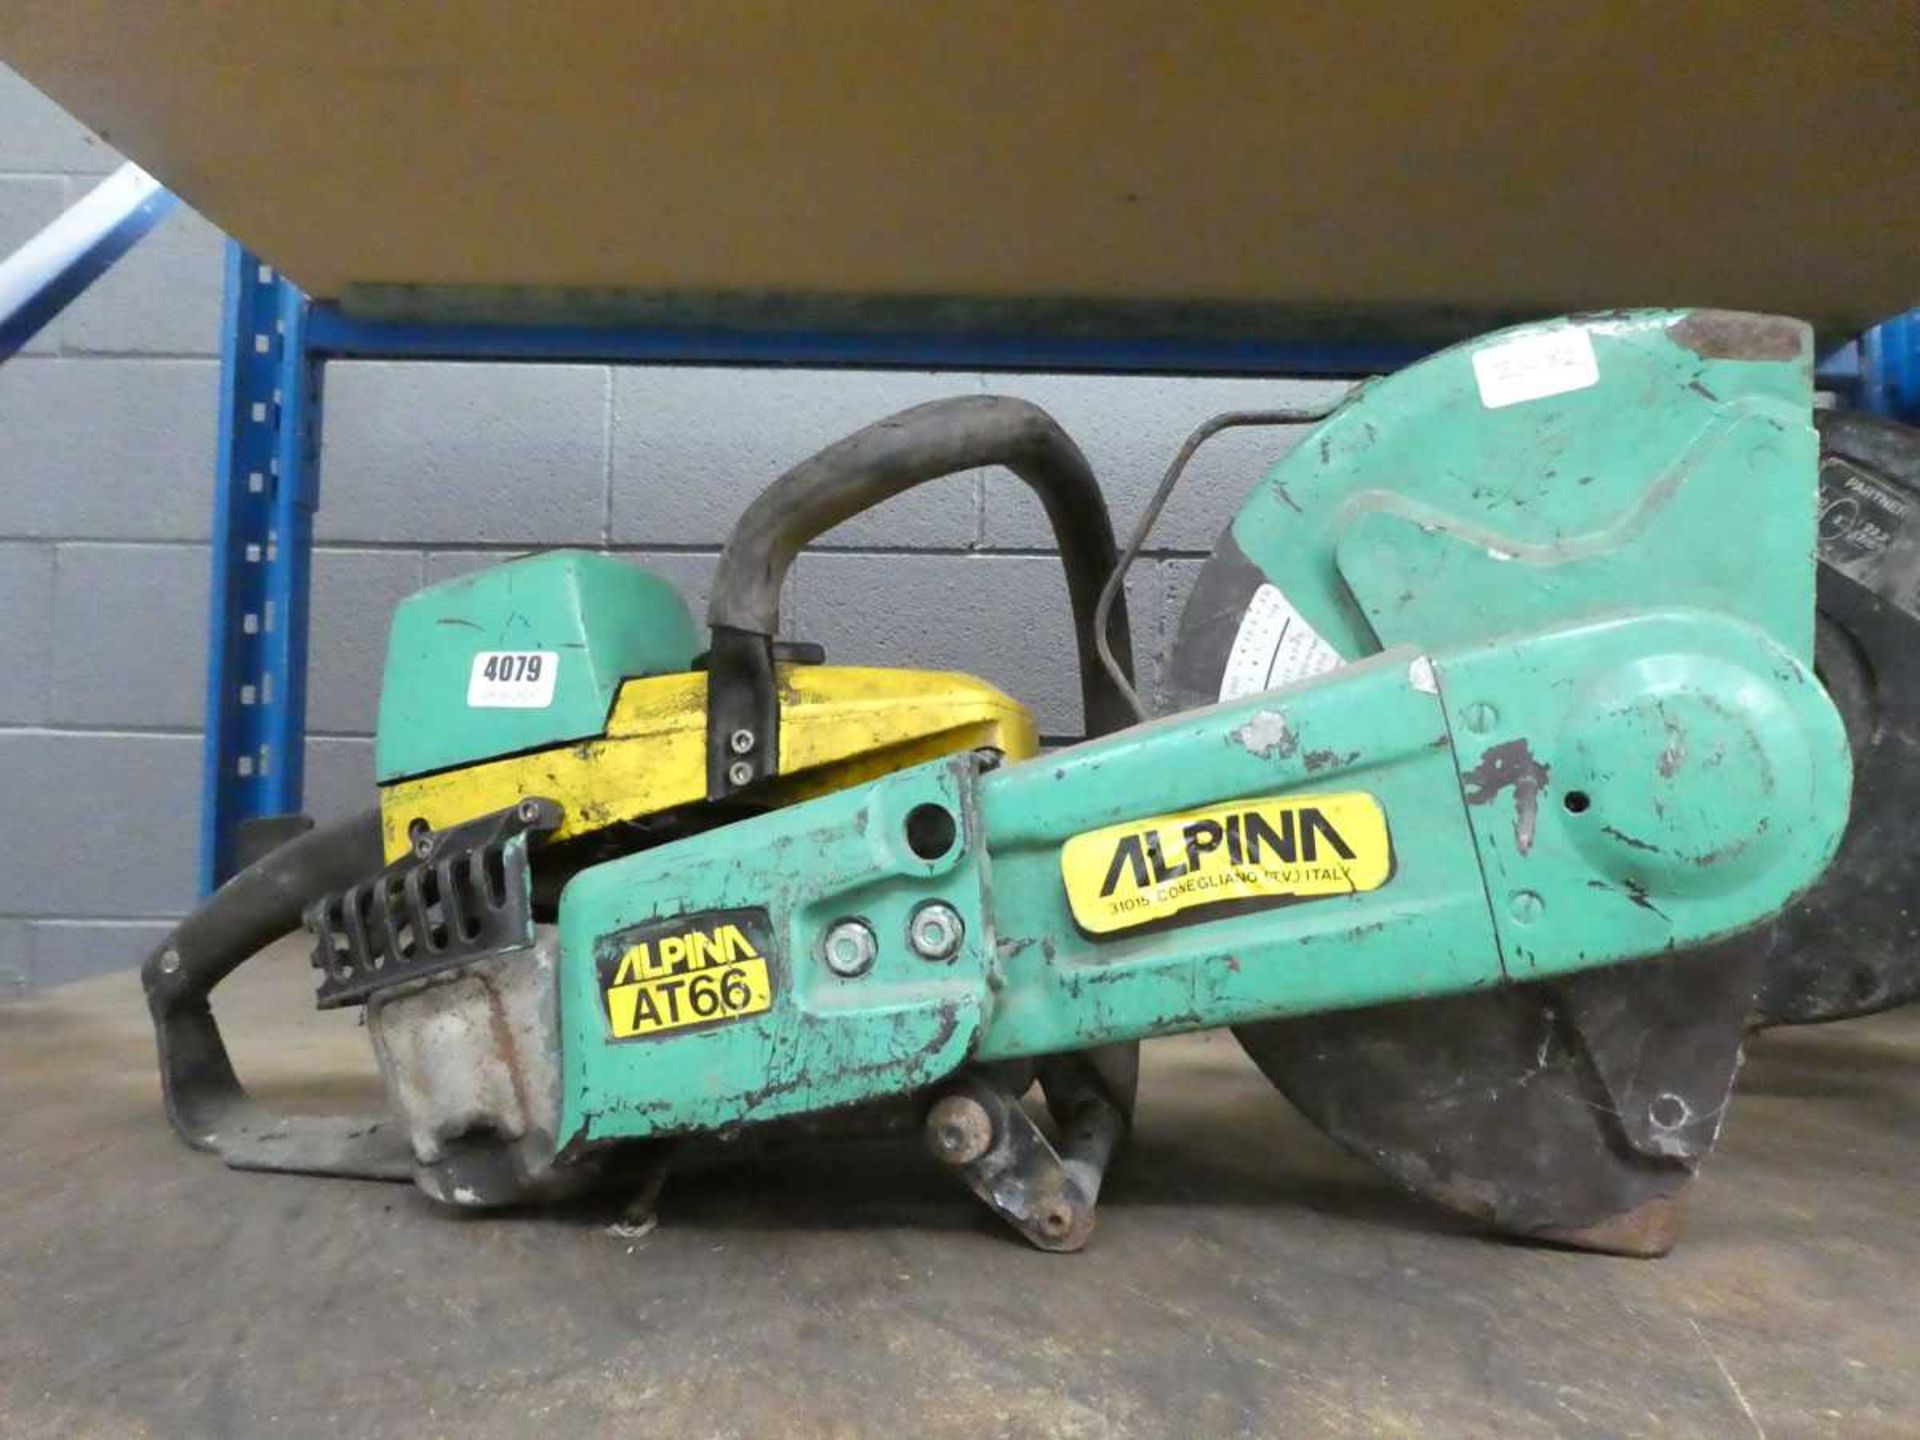 Alpina AT66 petrol powered disc cutter